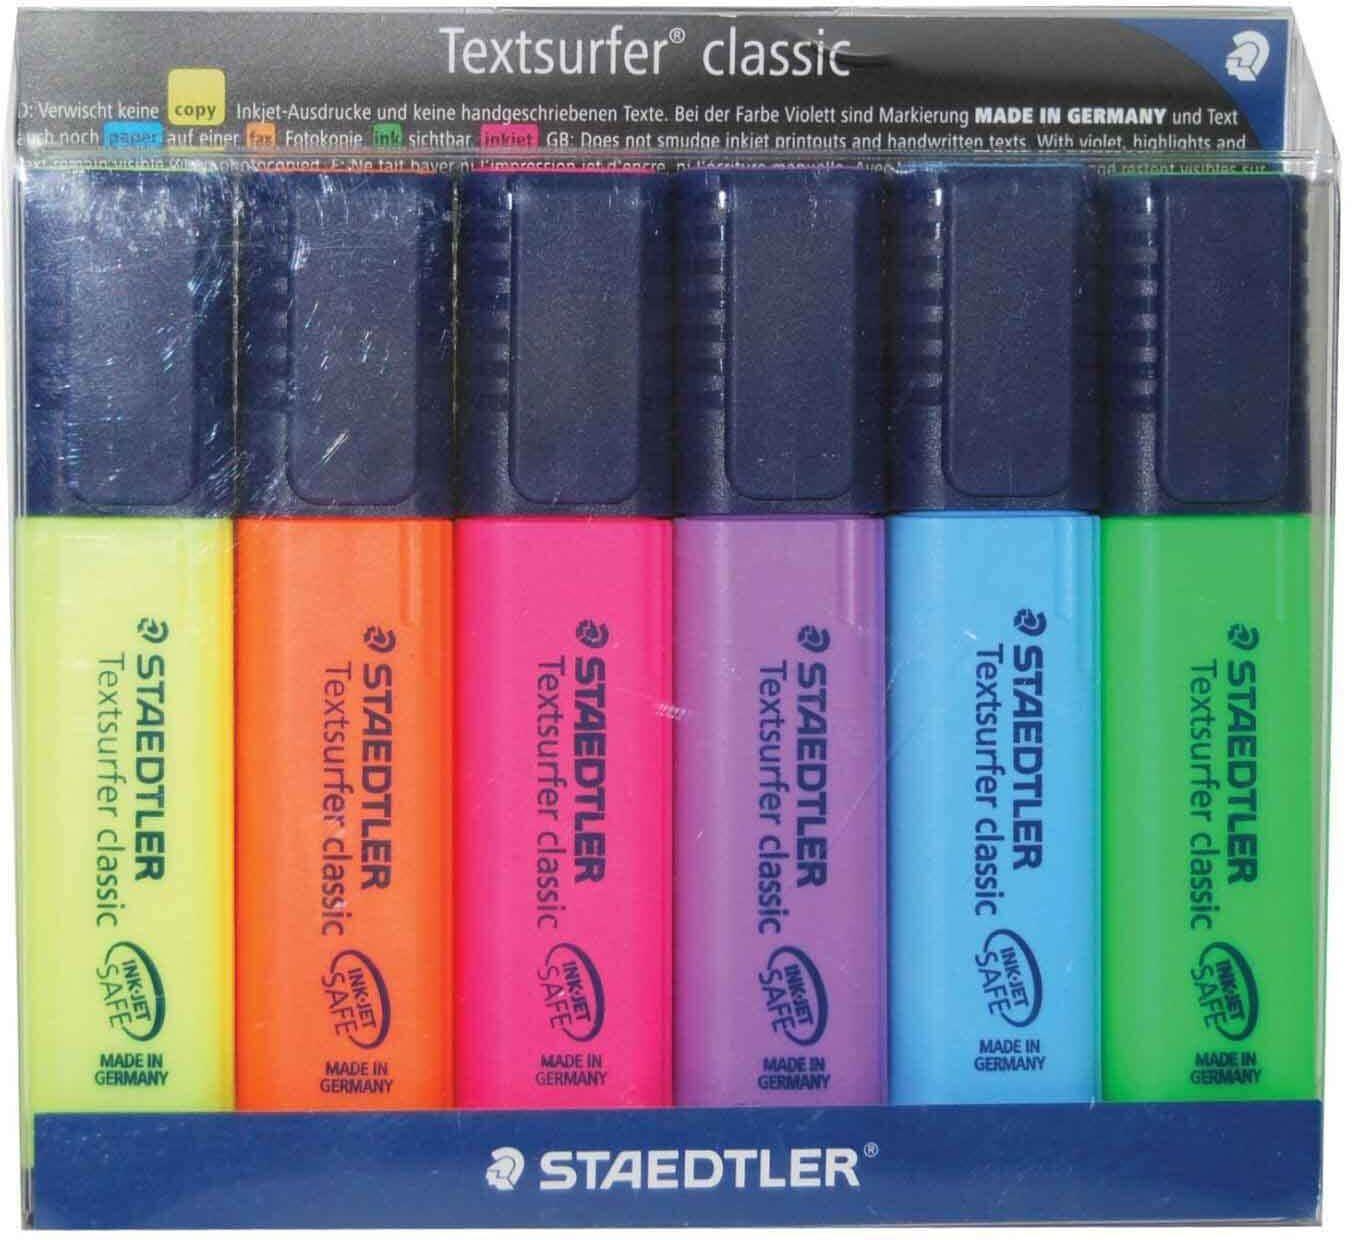 Staedtler Top Star Textsurfer Classic Highlighter Multicolour 6 PCS